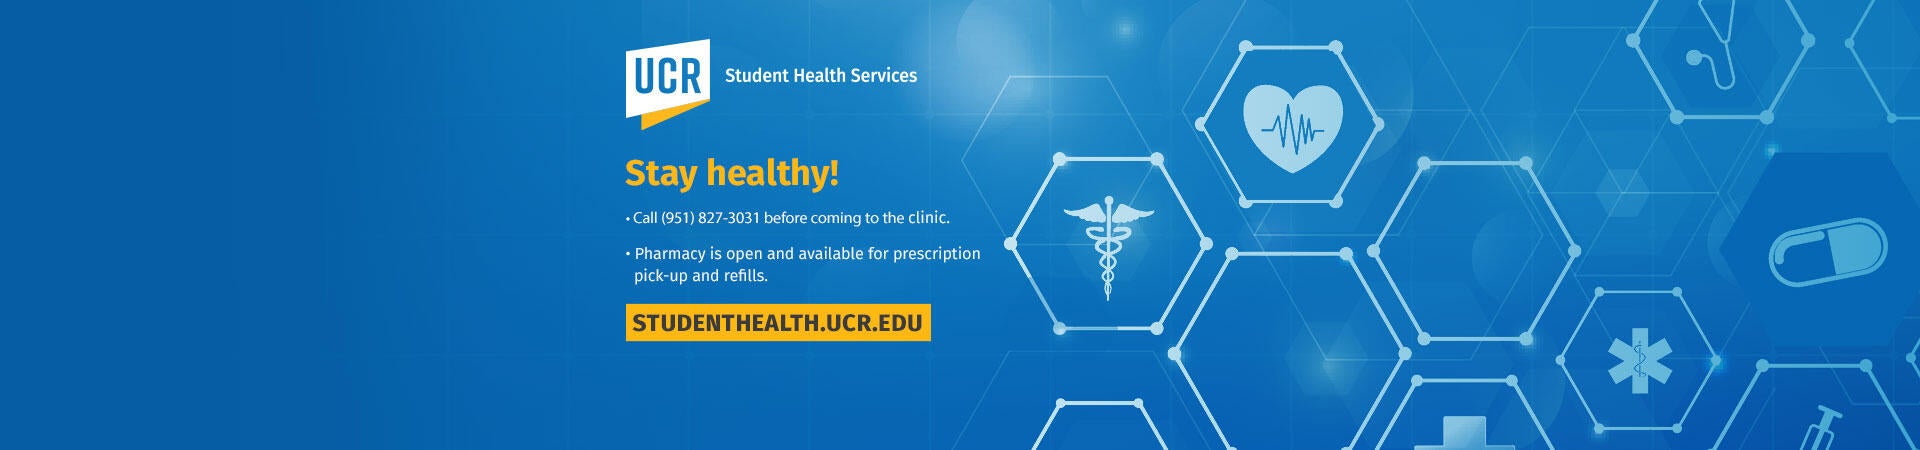 Stay healthy! STUDENTHEALTH.UCR.EDU